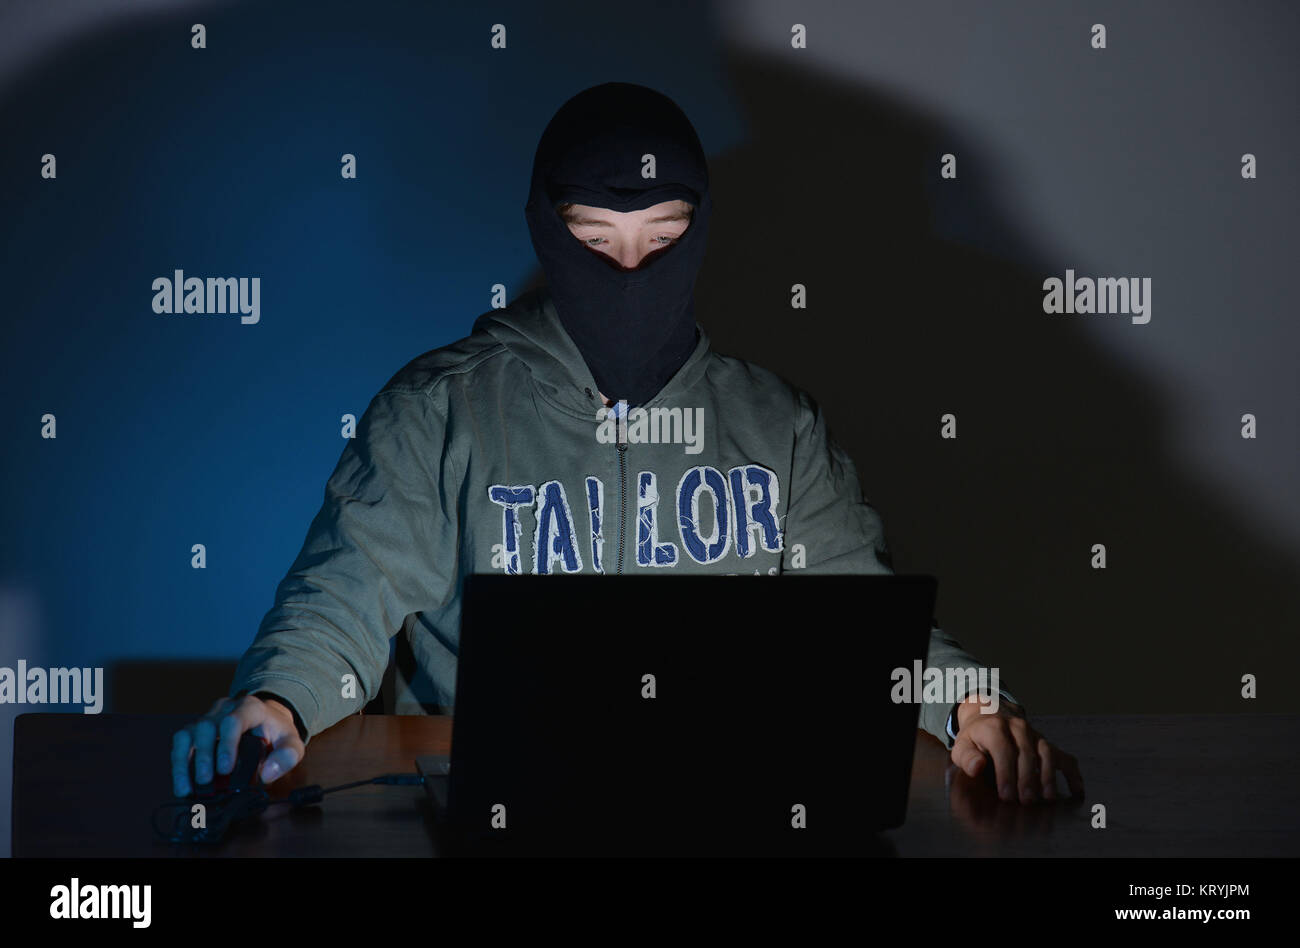 Foto simbolico Internet attività criminali, Symbolfoto Internetkriminalitaet Foto Stock